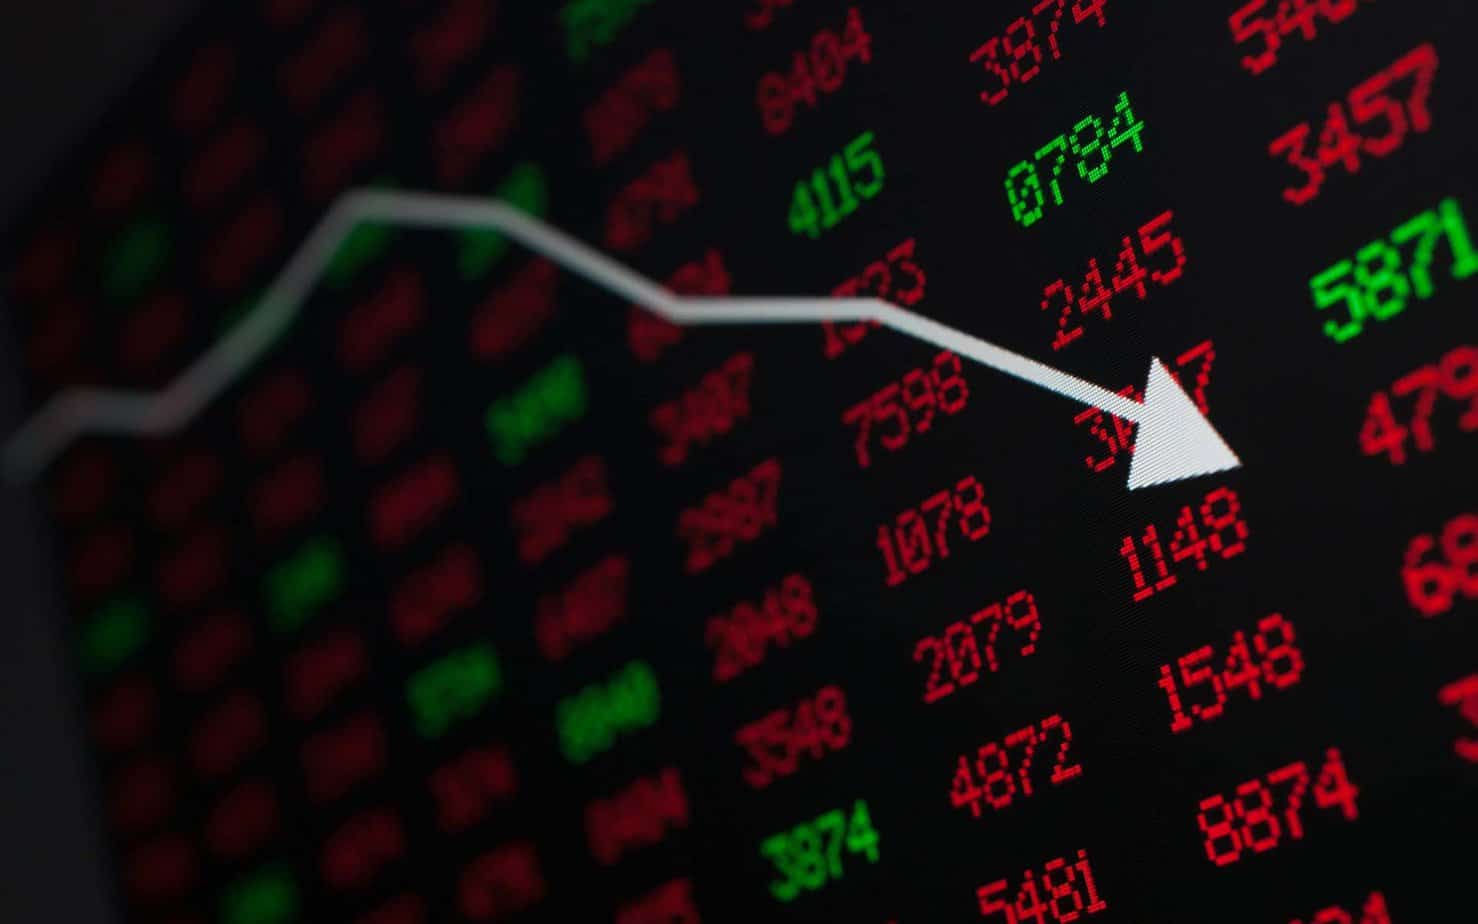 STOCK MARKET CRASH - Stocks plummet amidst Coronavirus concerns